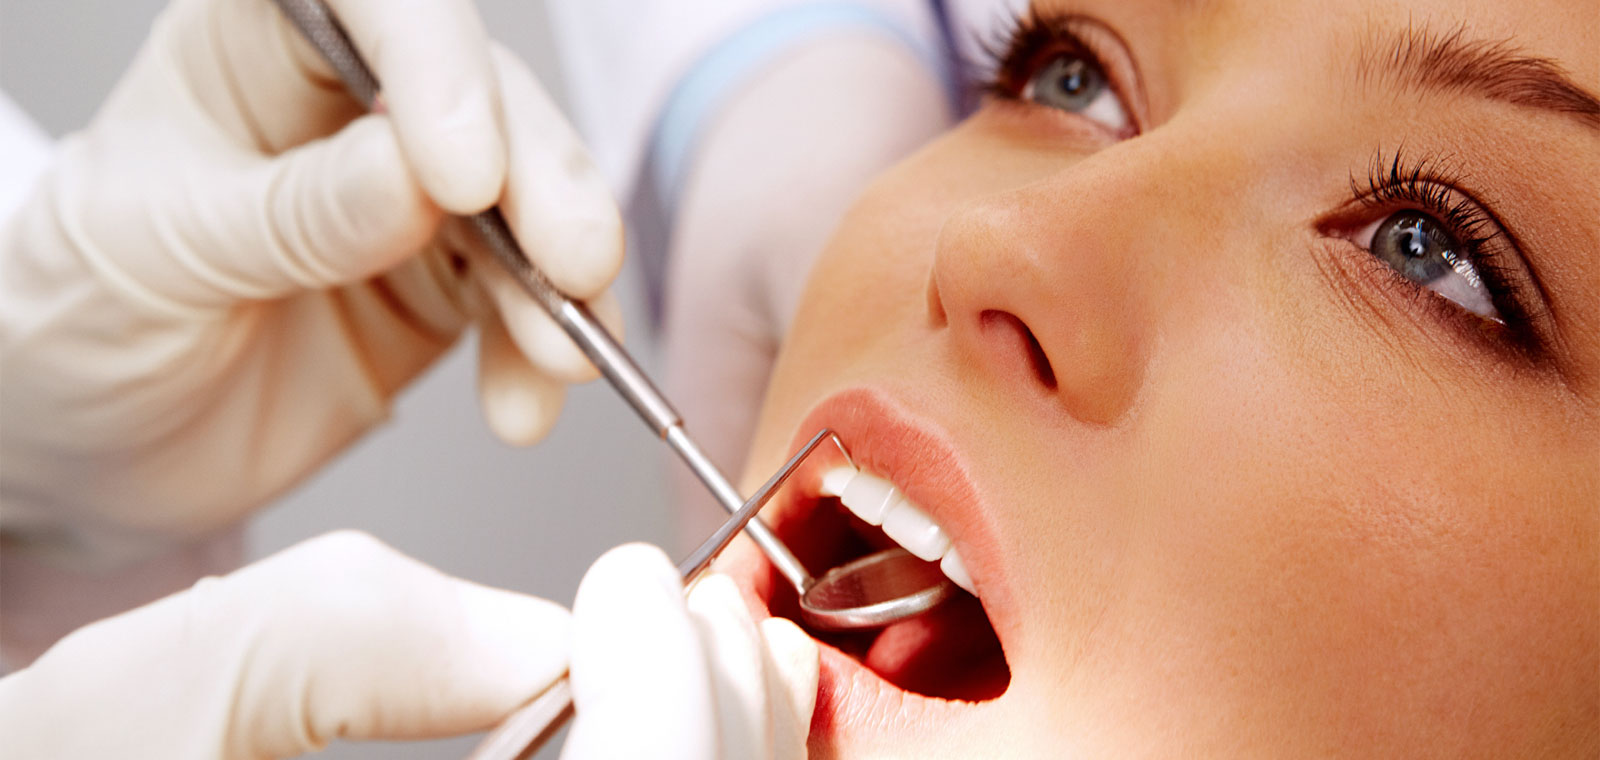 Dental Scaling and Polishing